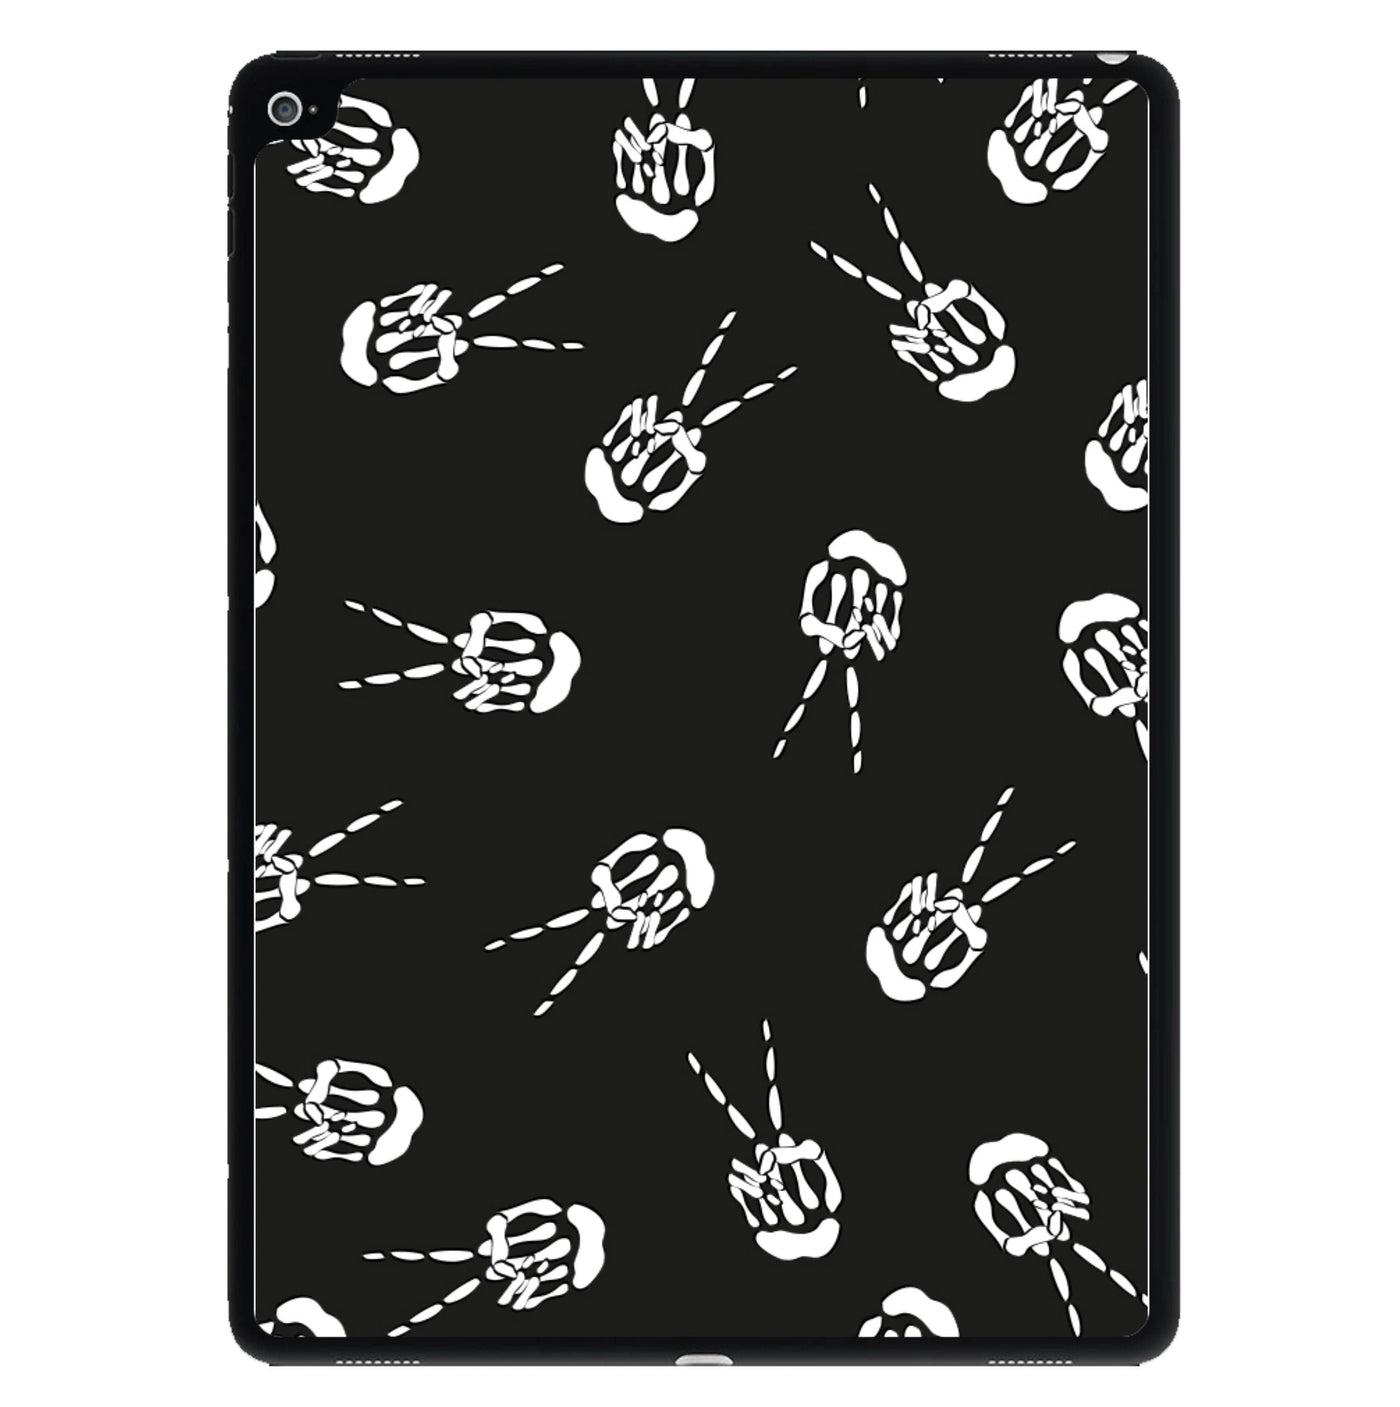 Skeleton Fingers - Halloween iPad Case